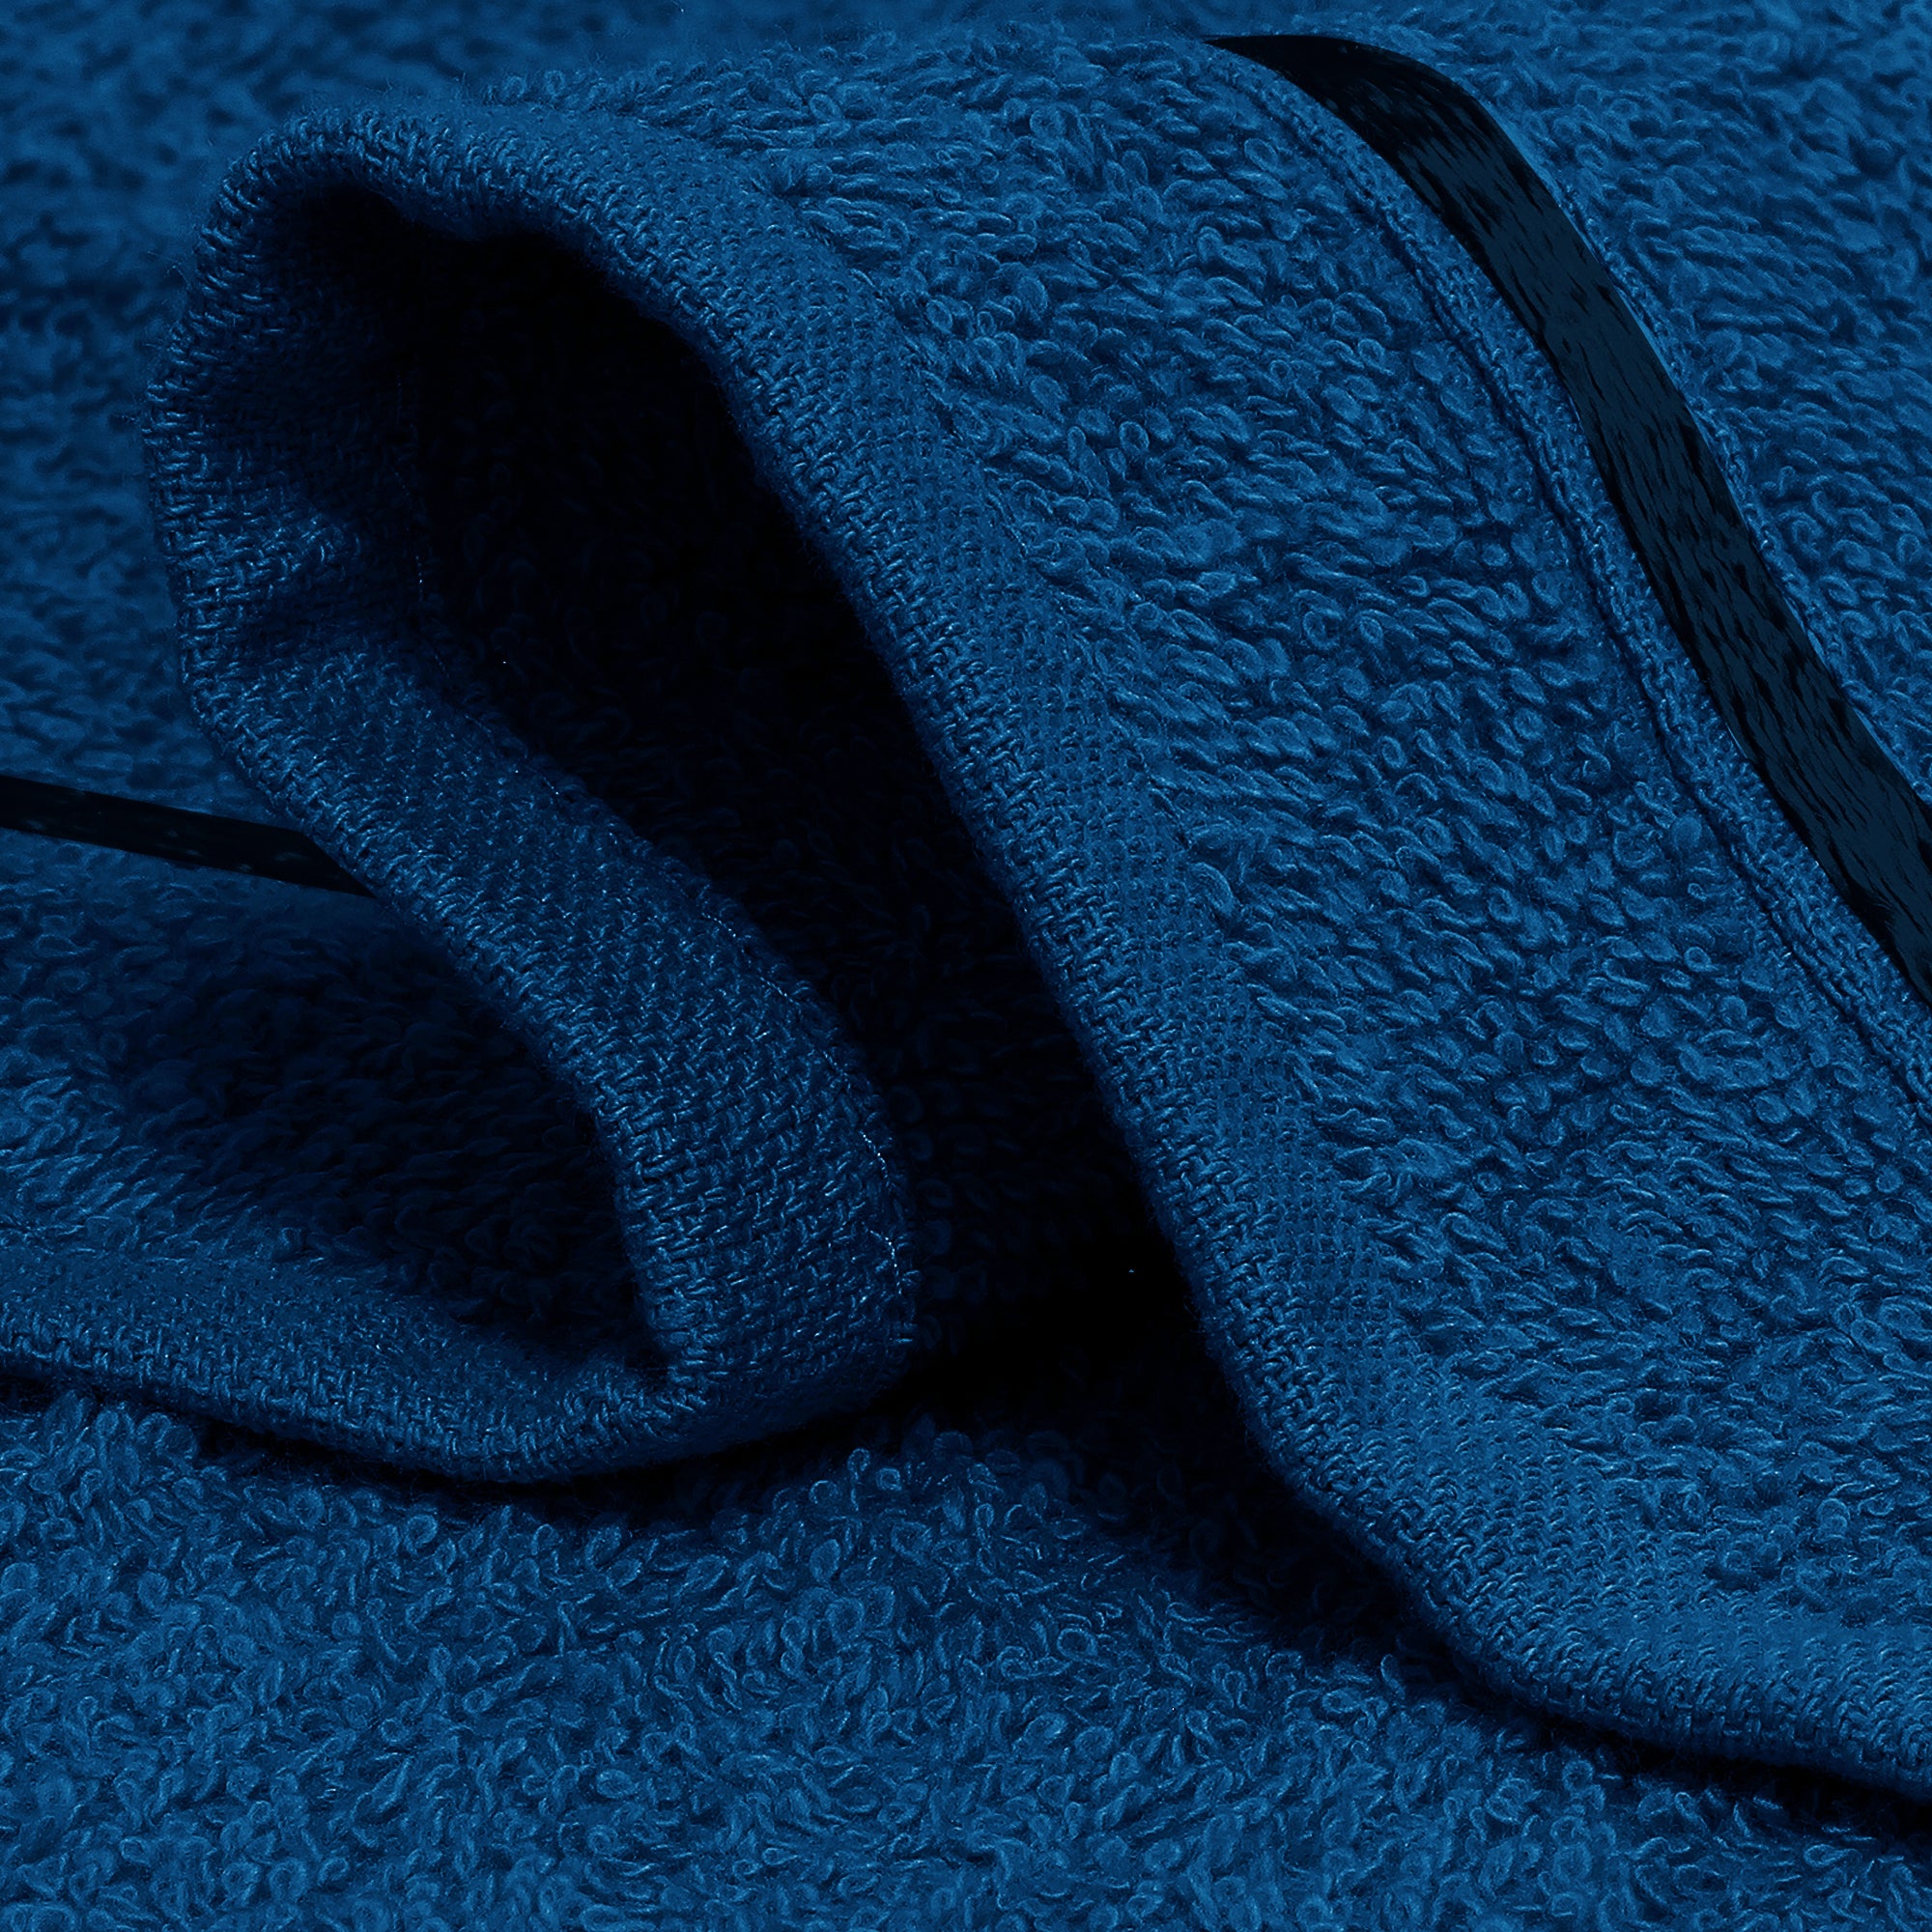 Story@Home 4 Units 100% Cotton Bath Towel - Navy Blue